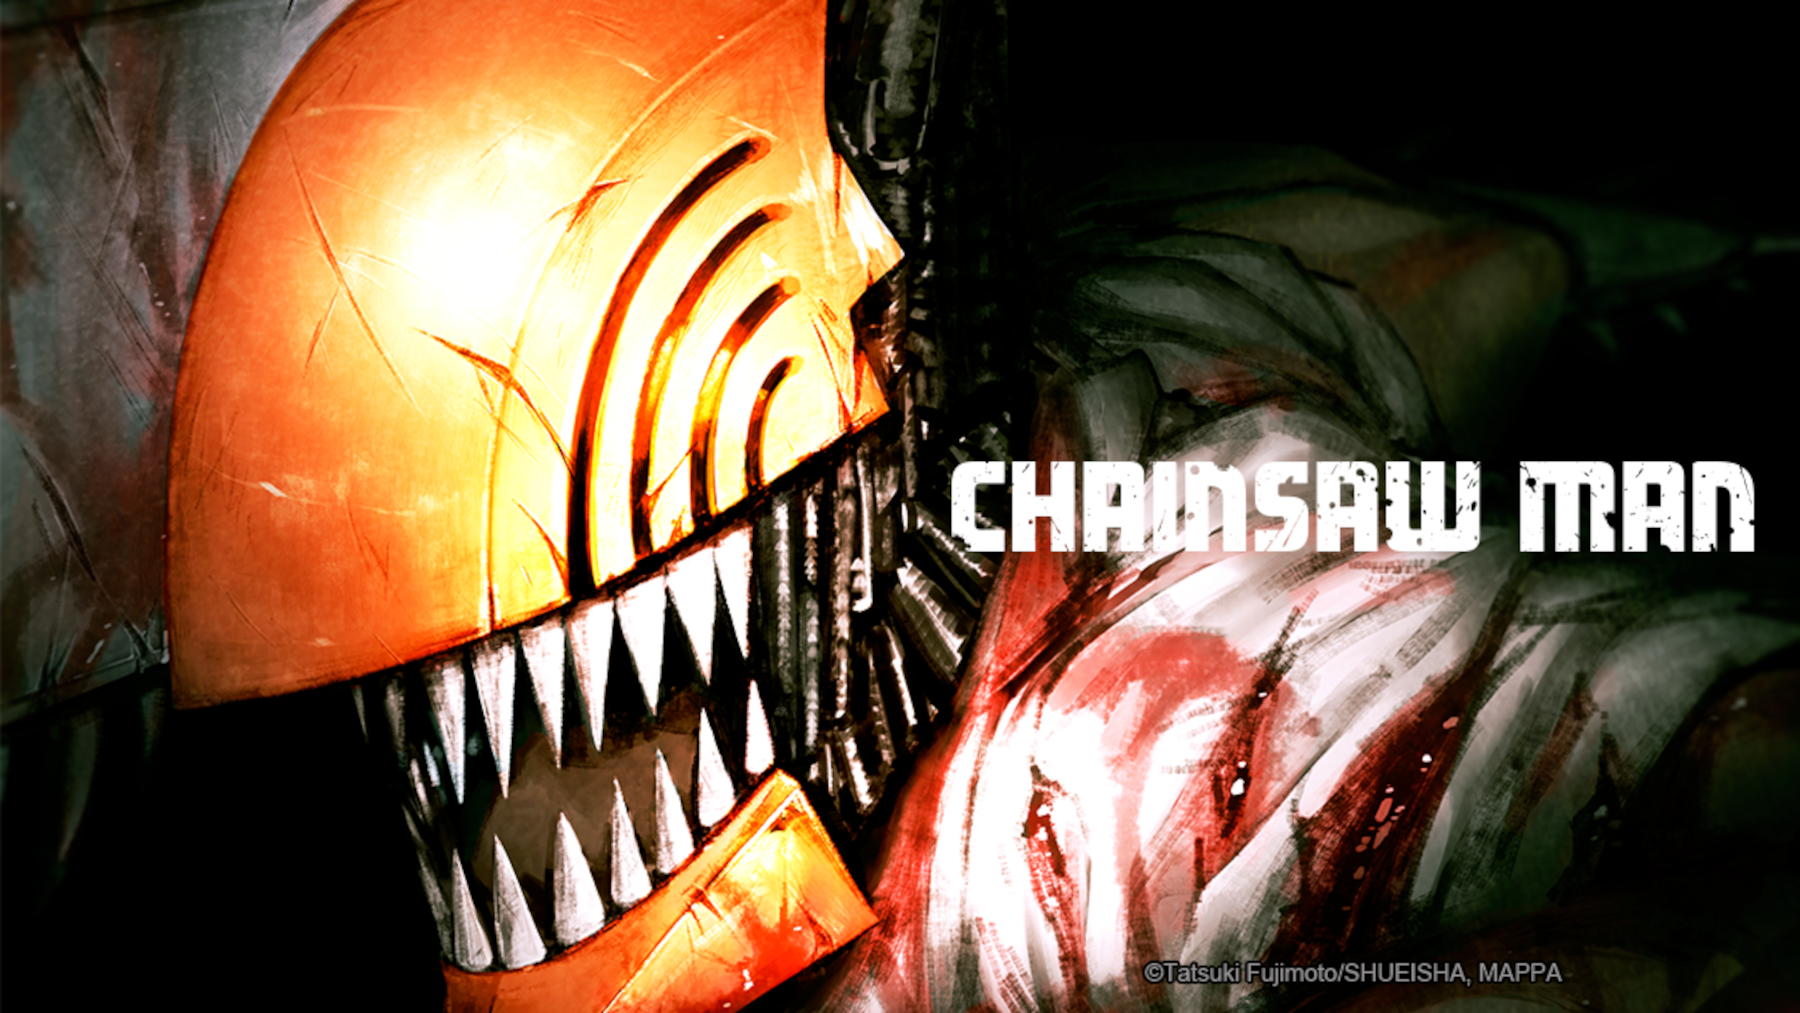 Chainsaw Man  Trailer VS Manga 